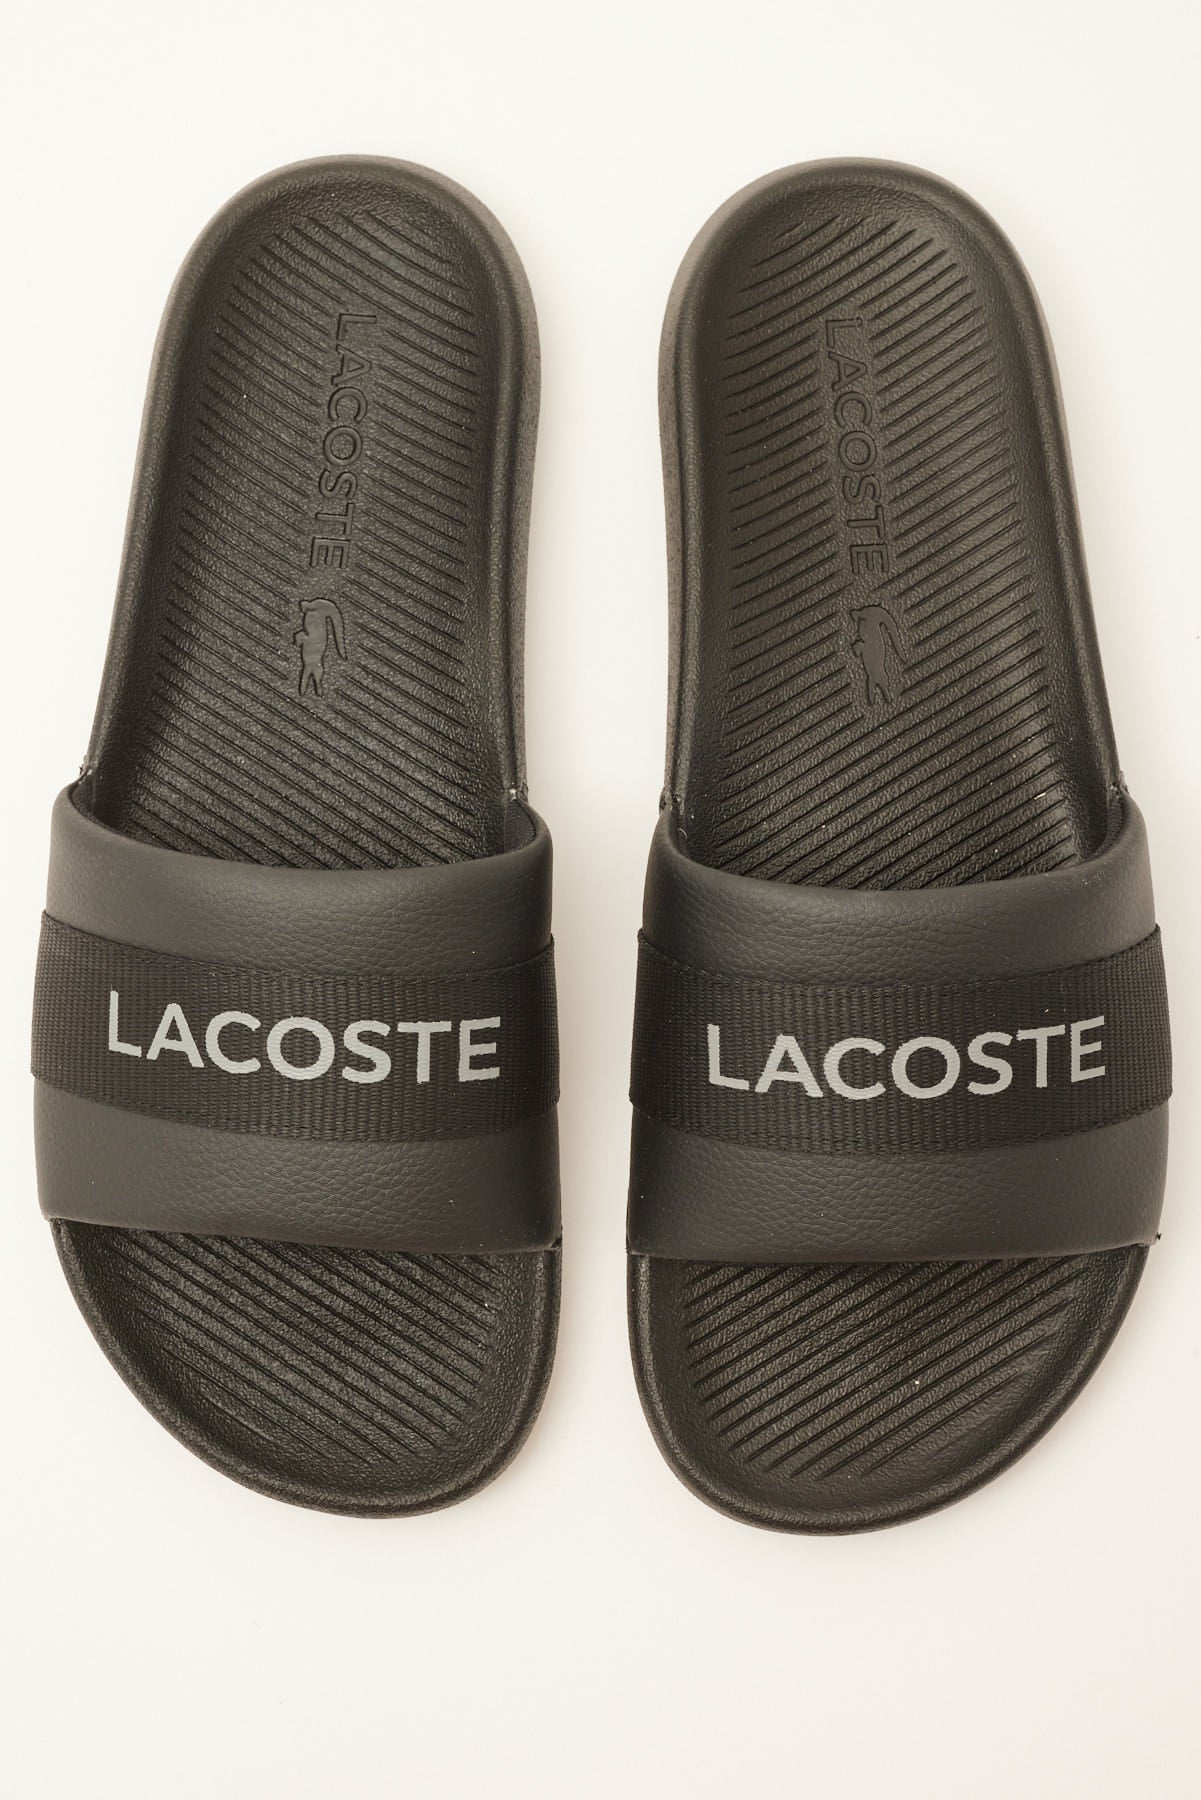 Lacoste Croco Slide Black/Black